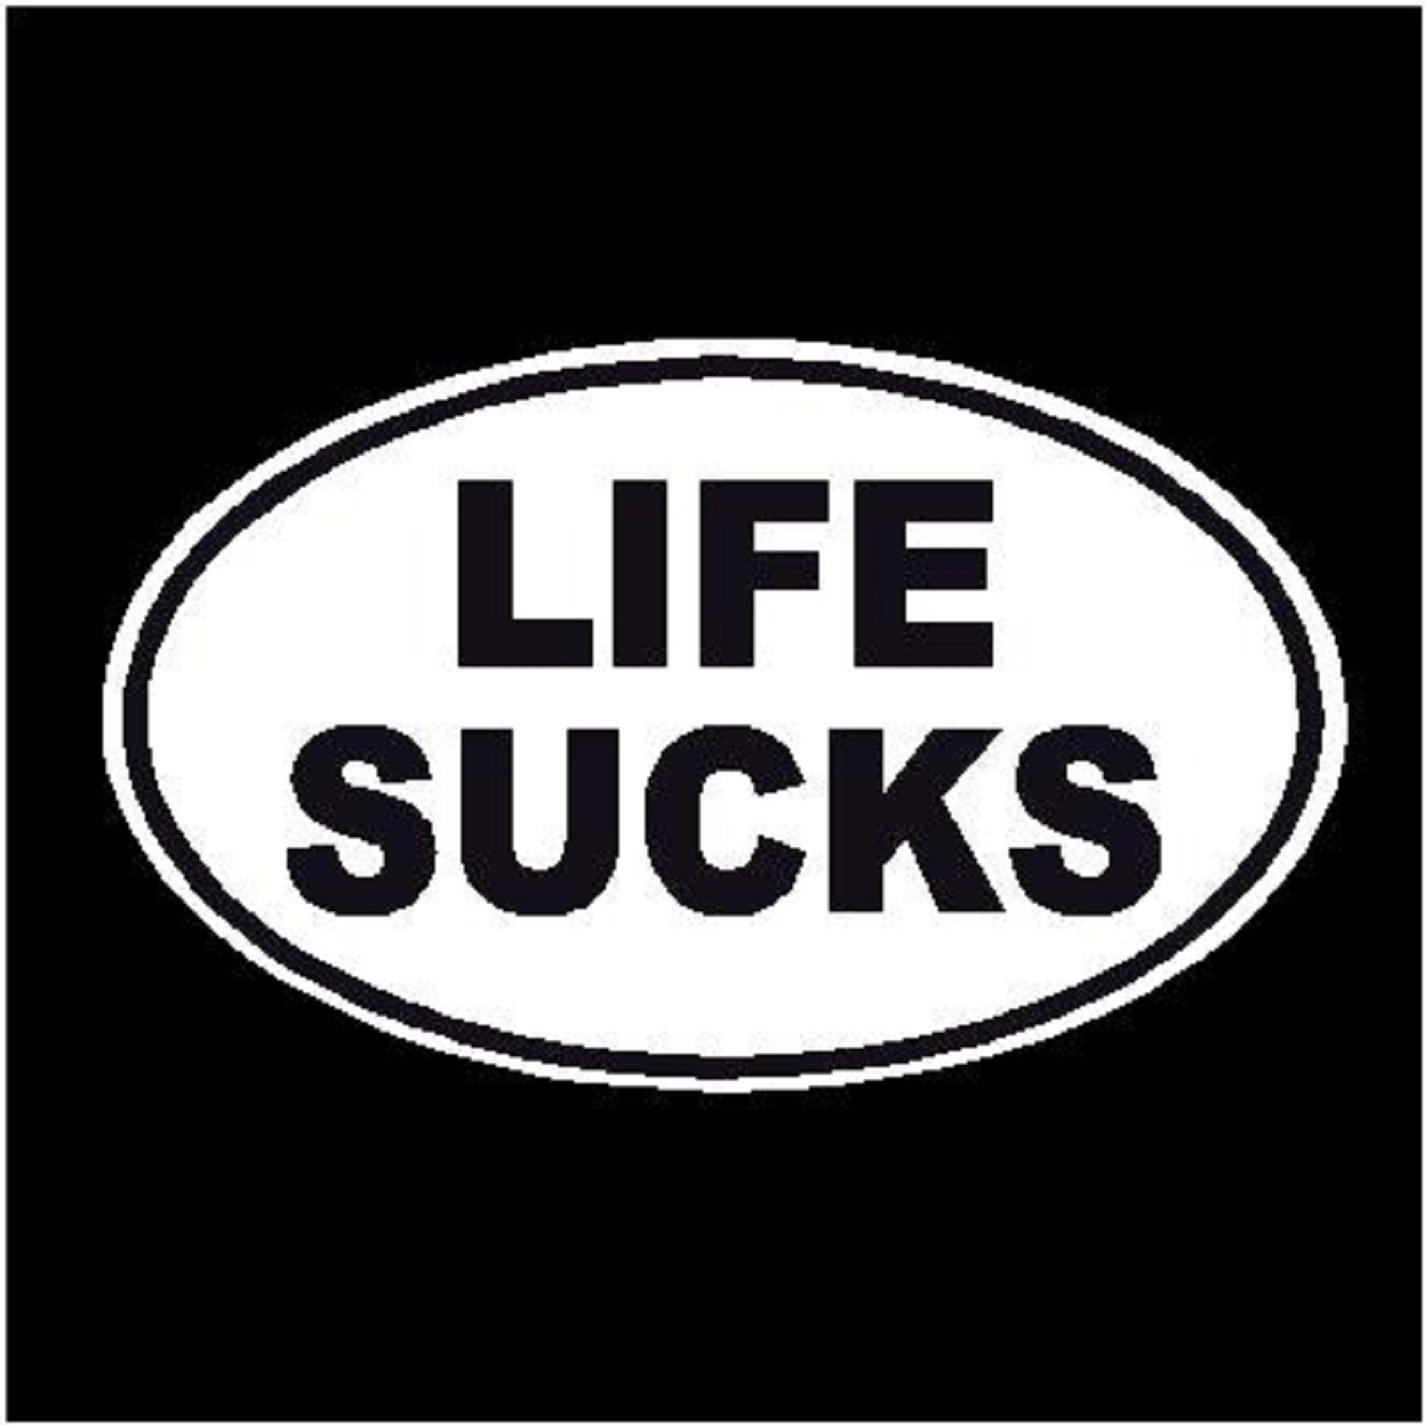 life sucks!